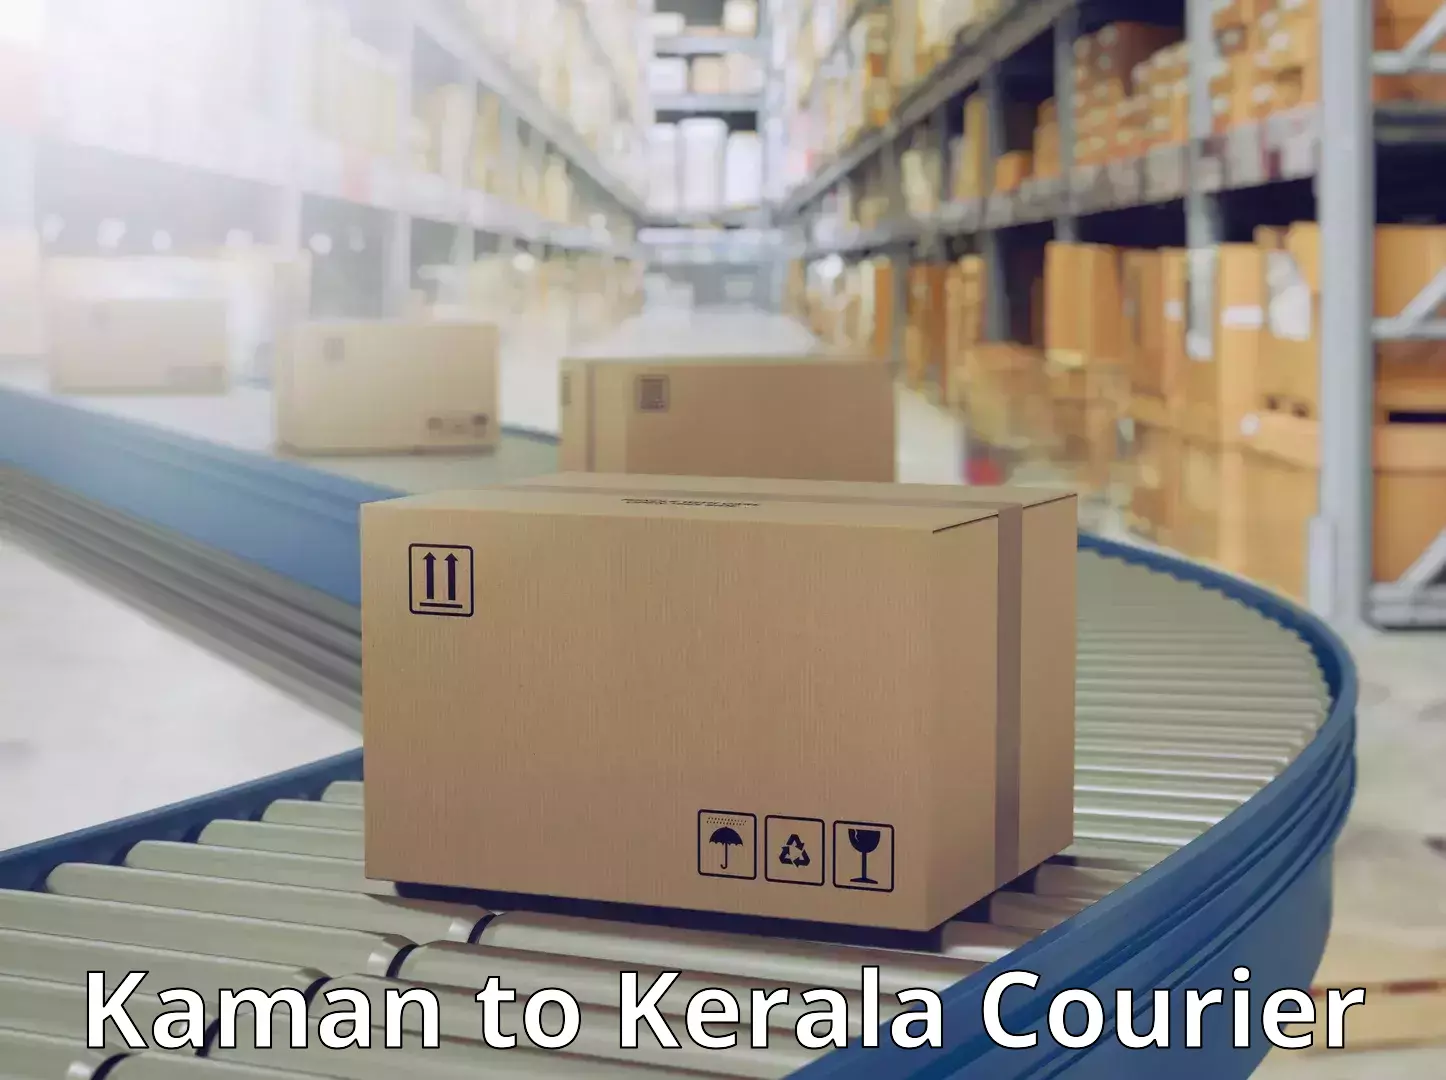 Same-day delivery solutions Kaman to Nileshwar